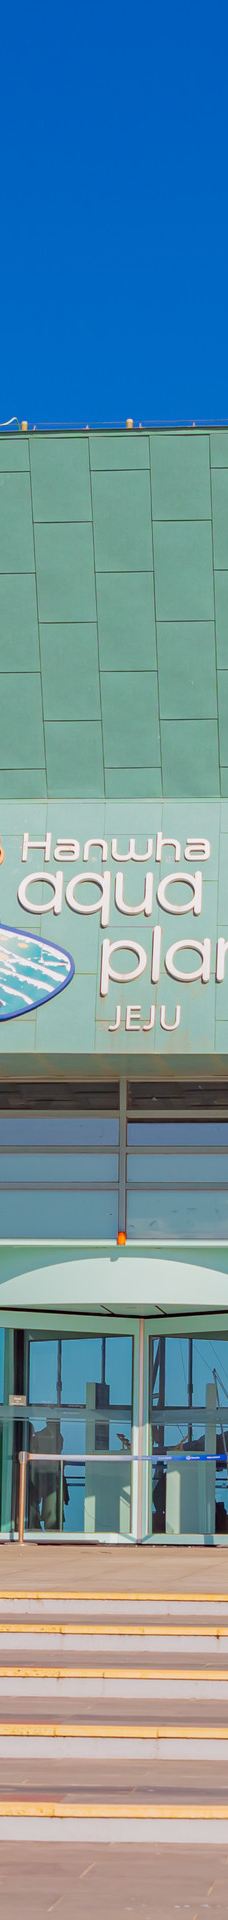 济州岛Aqua Planet水族馆-西归浦市